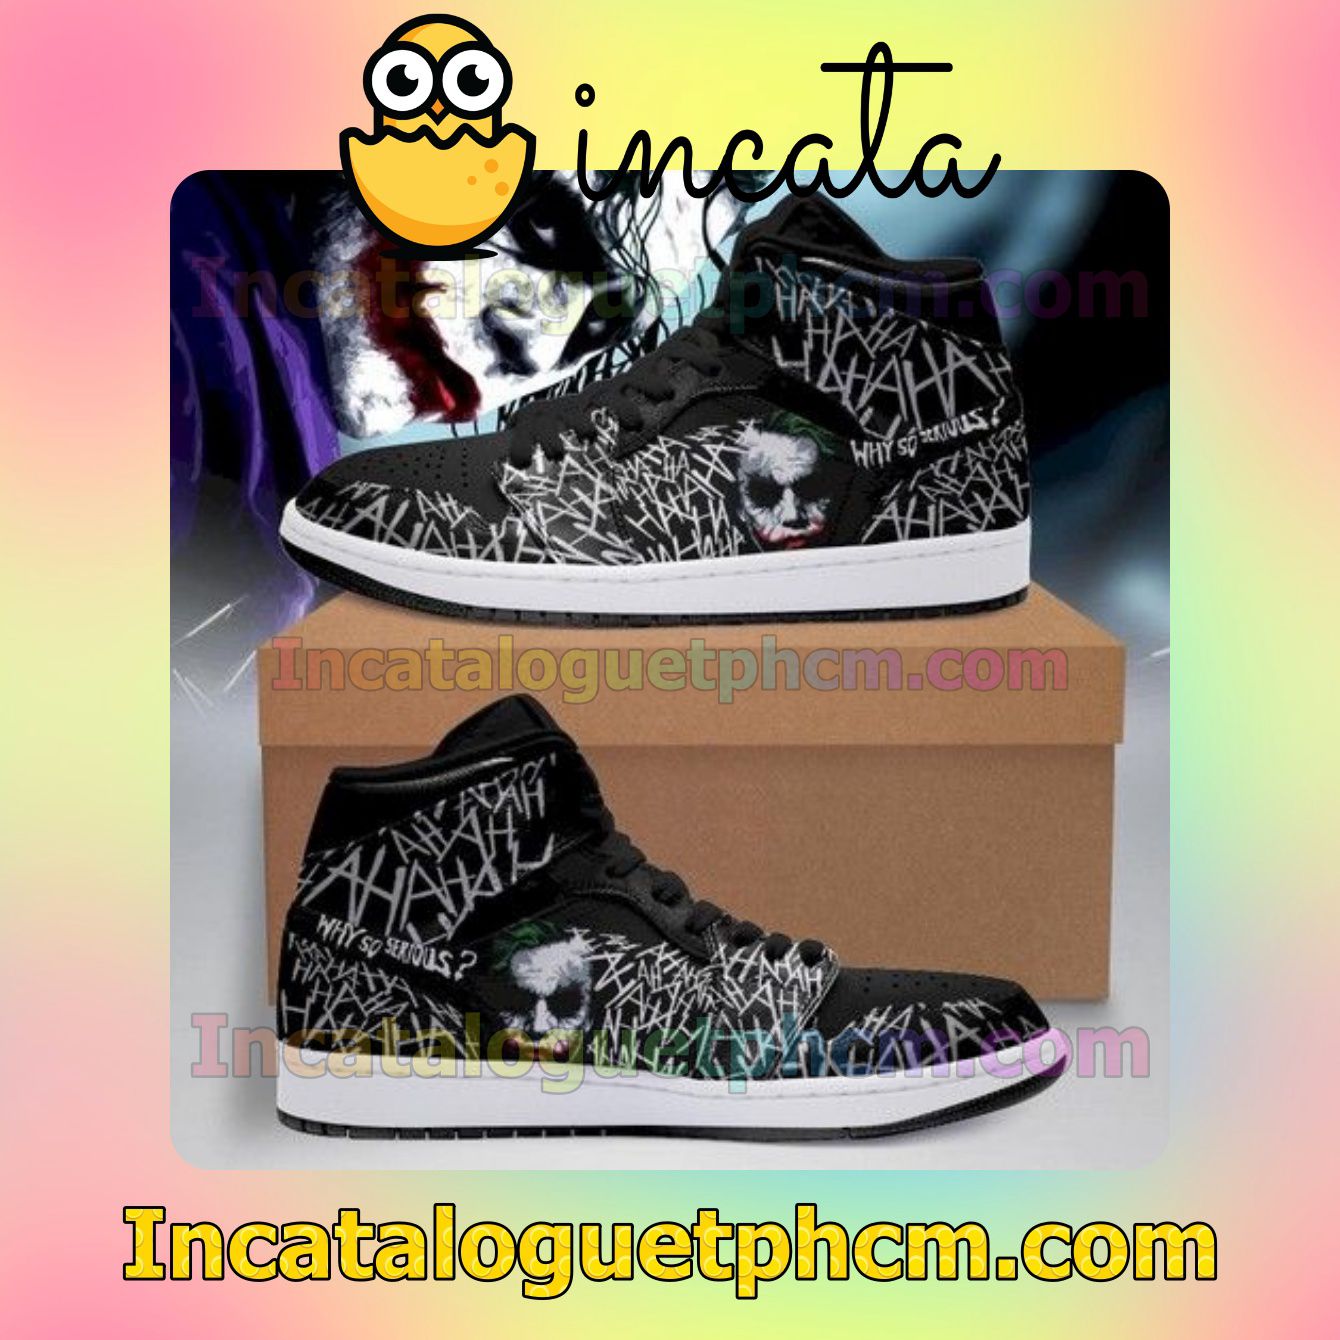 Official The Joker Haha Jd Gift For Fan Air Jordan 1 Inspired Shoes